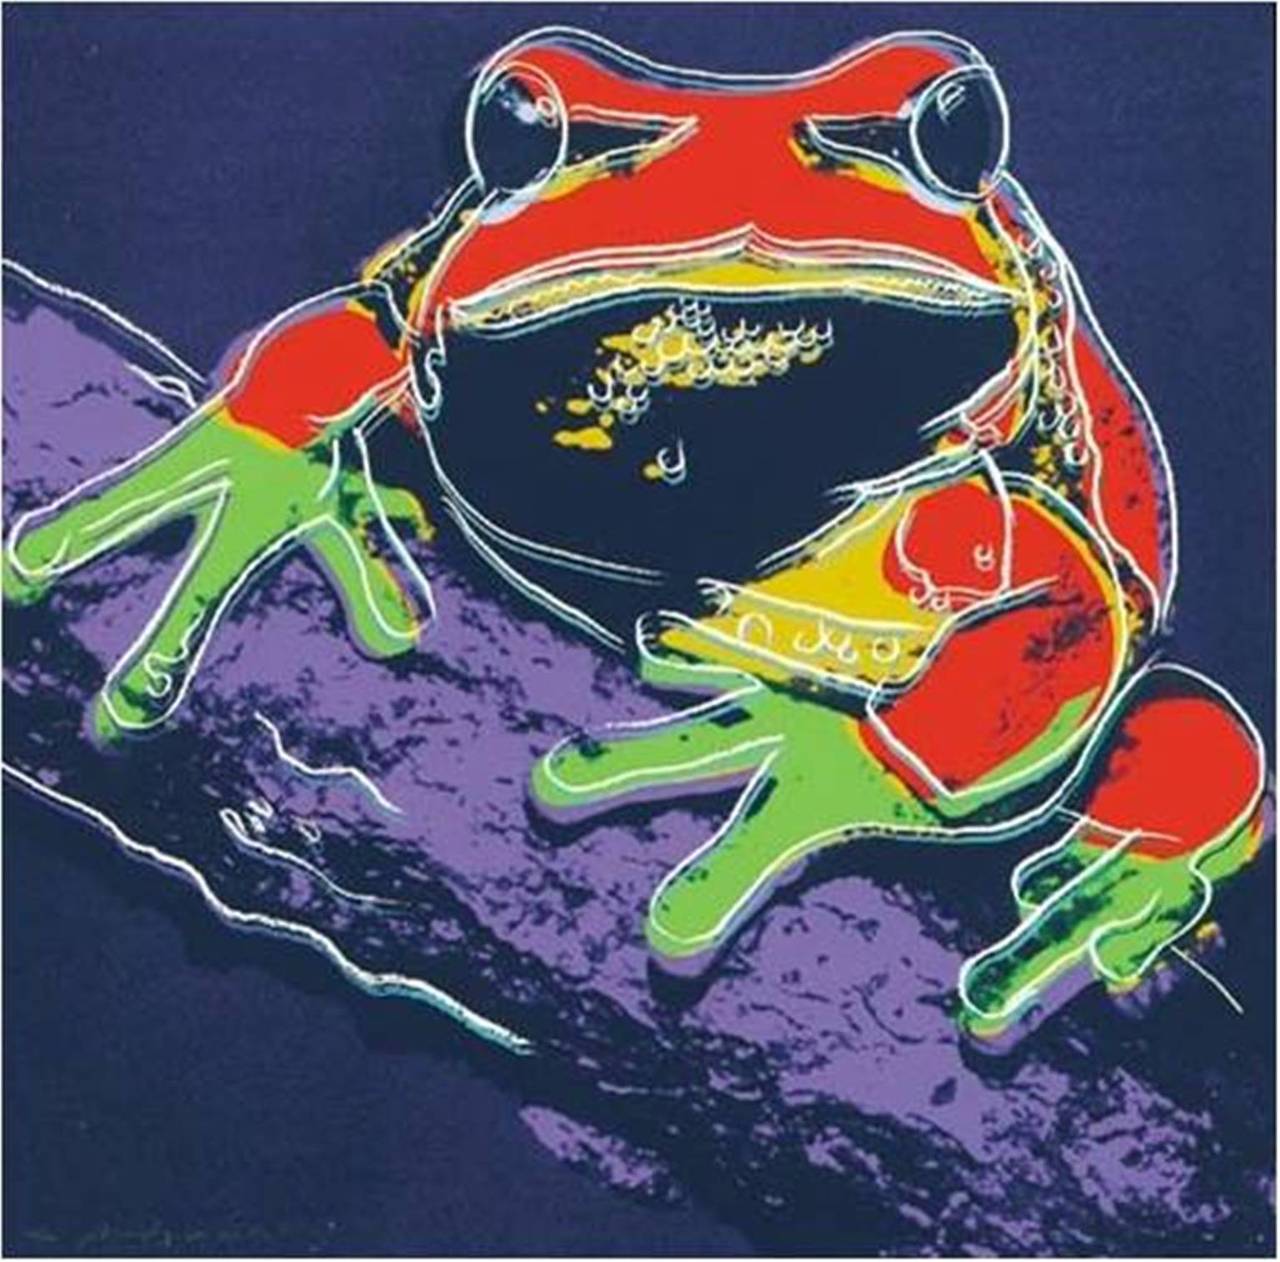 Pine Barrens Tree Frog - Print by Andy Warhol